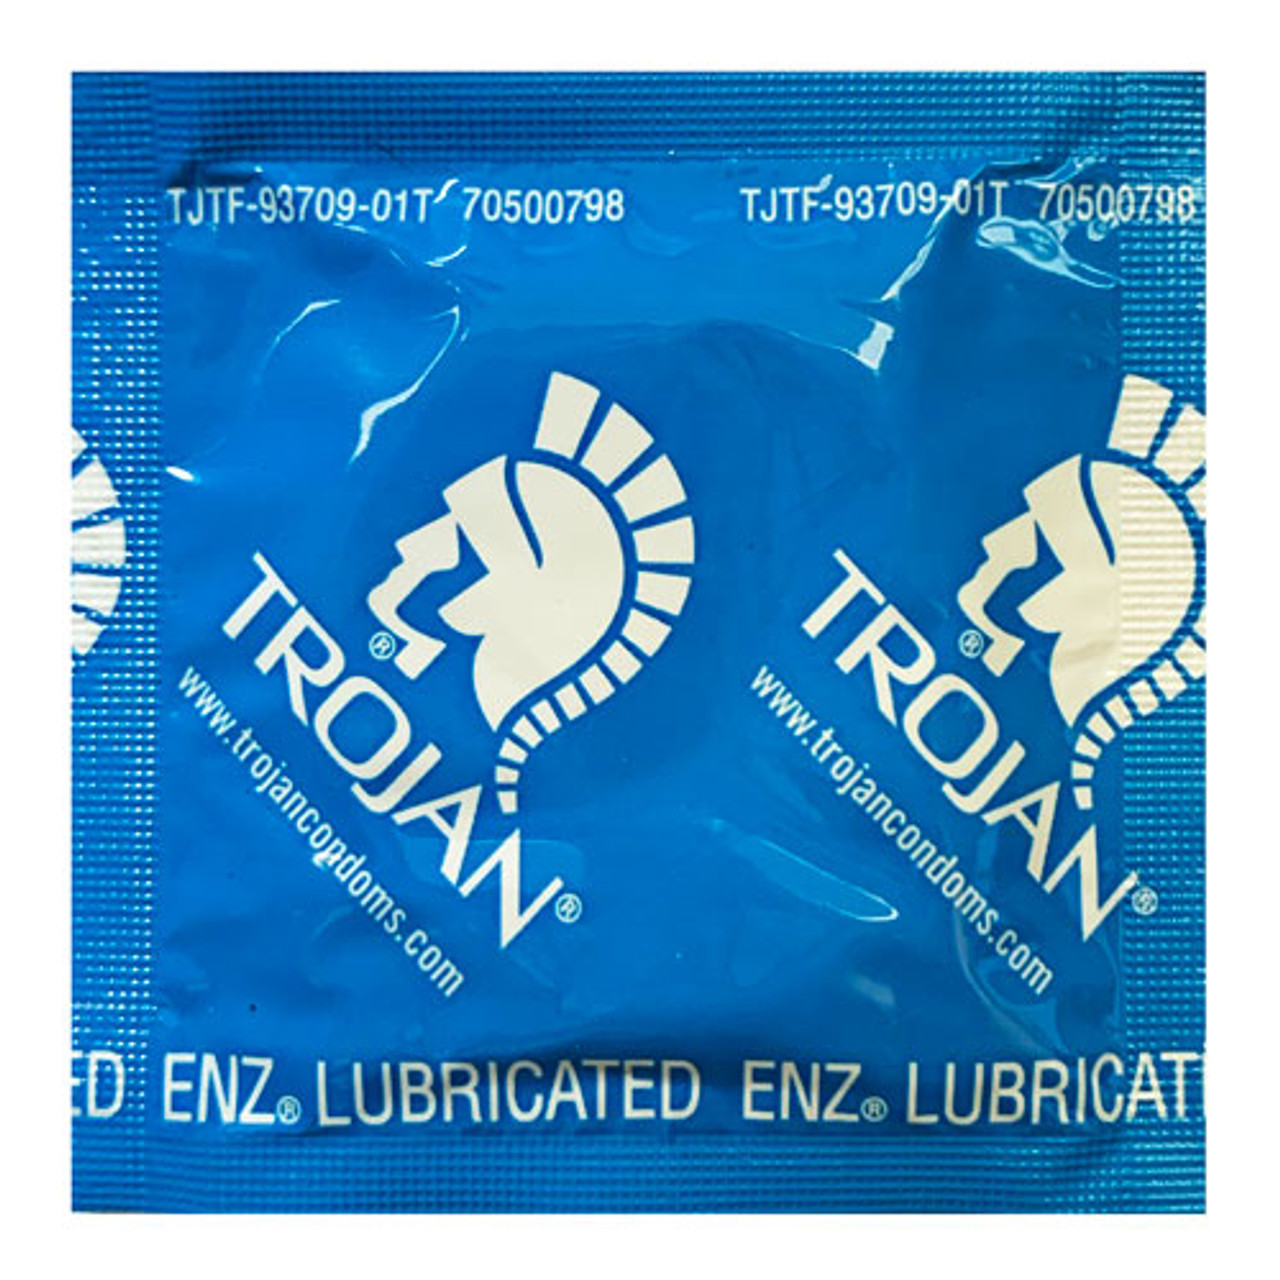 Yabai Products - CondomDepot WHOLESALE - Wholesale Condom Distributors